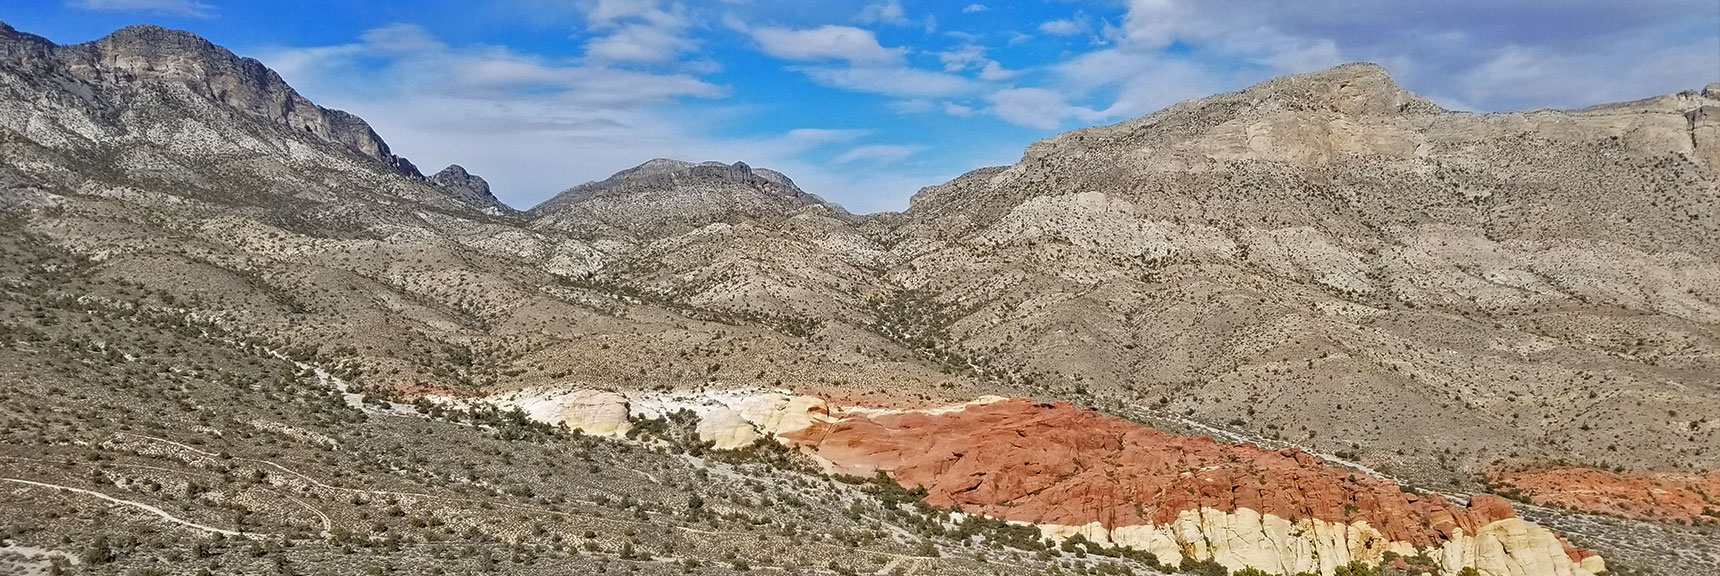 Upper Calico Hills and Damsel Peak in Calico Basin, Nevada